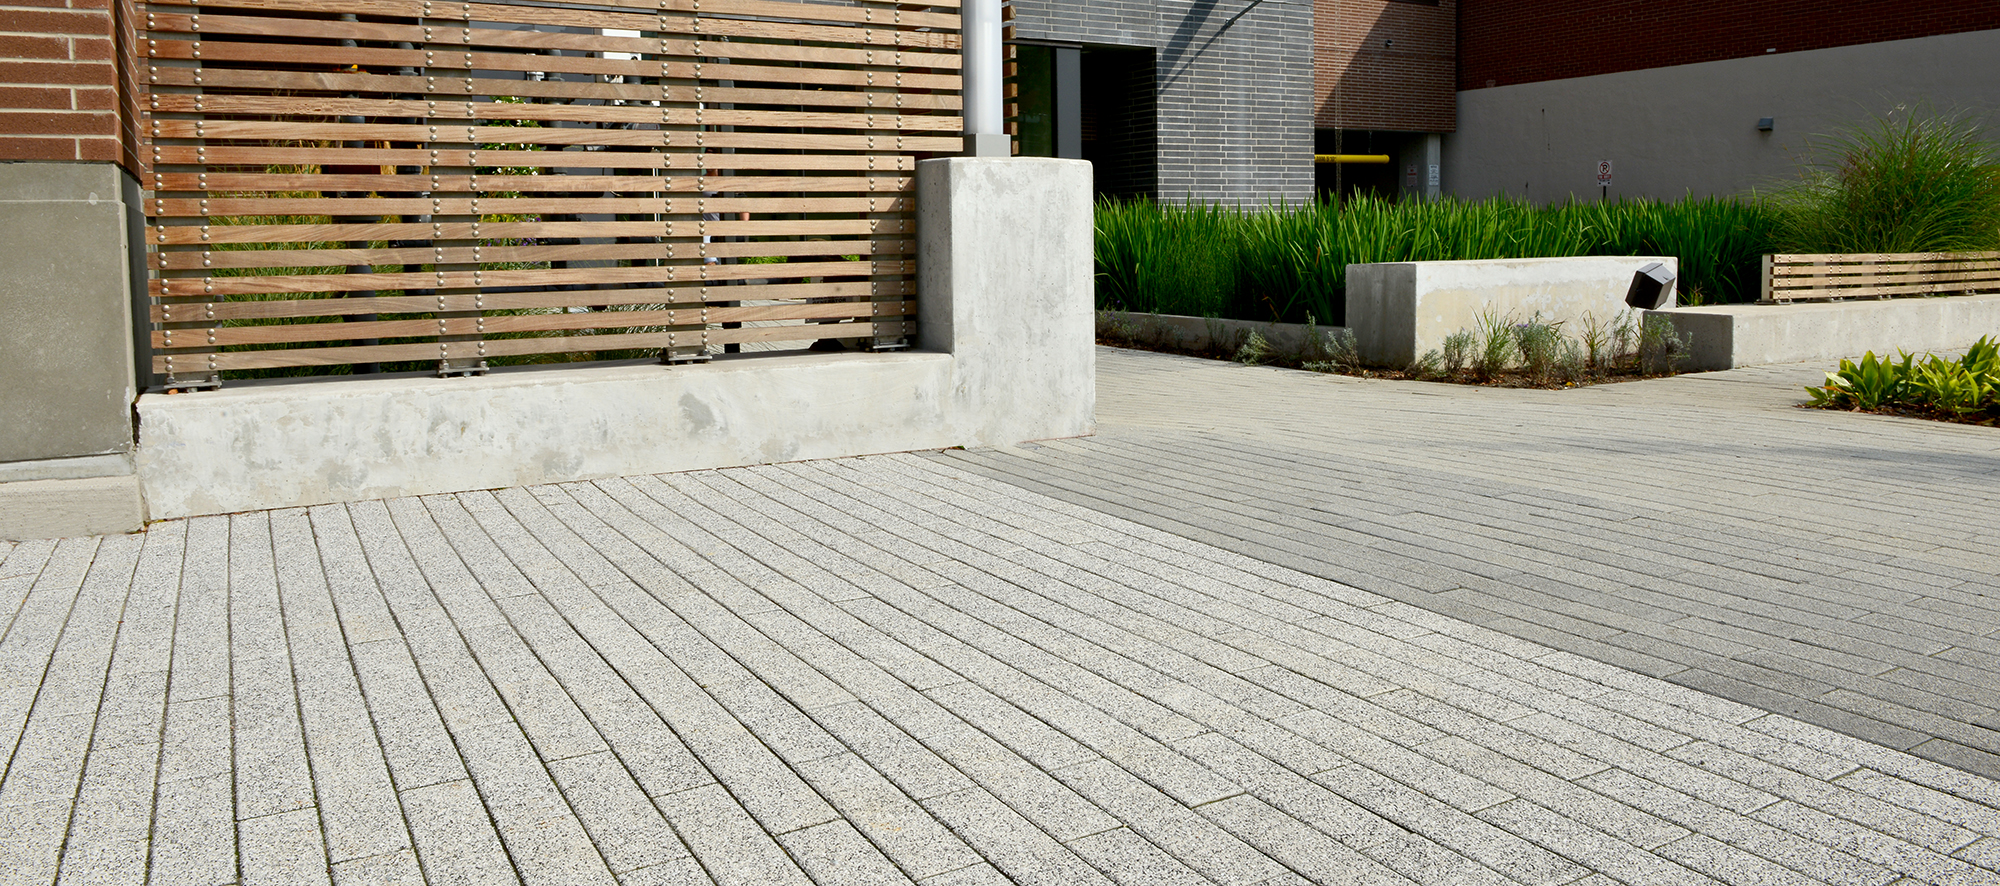 Unilock Promenade Plank pavers in a speckled Umbriano finish create a driveway for 400 Wellington Condominium in Toronto Ontario.